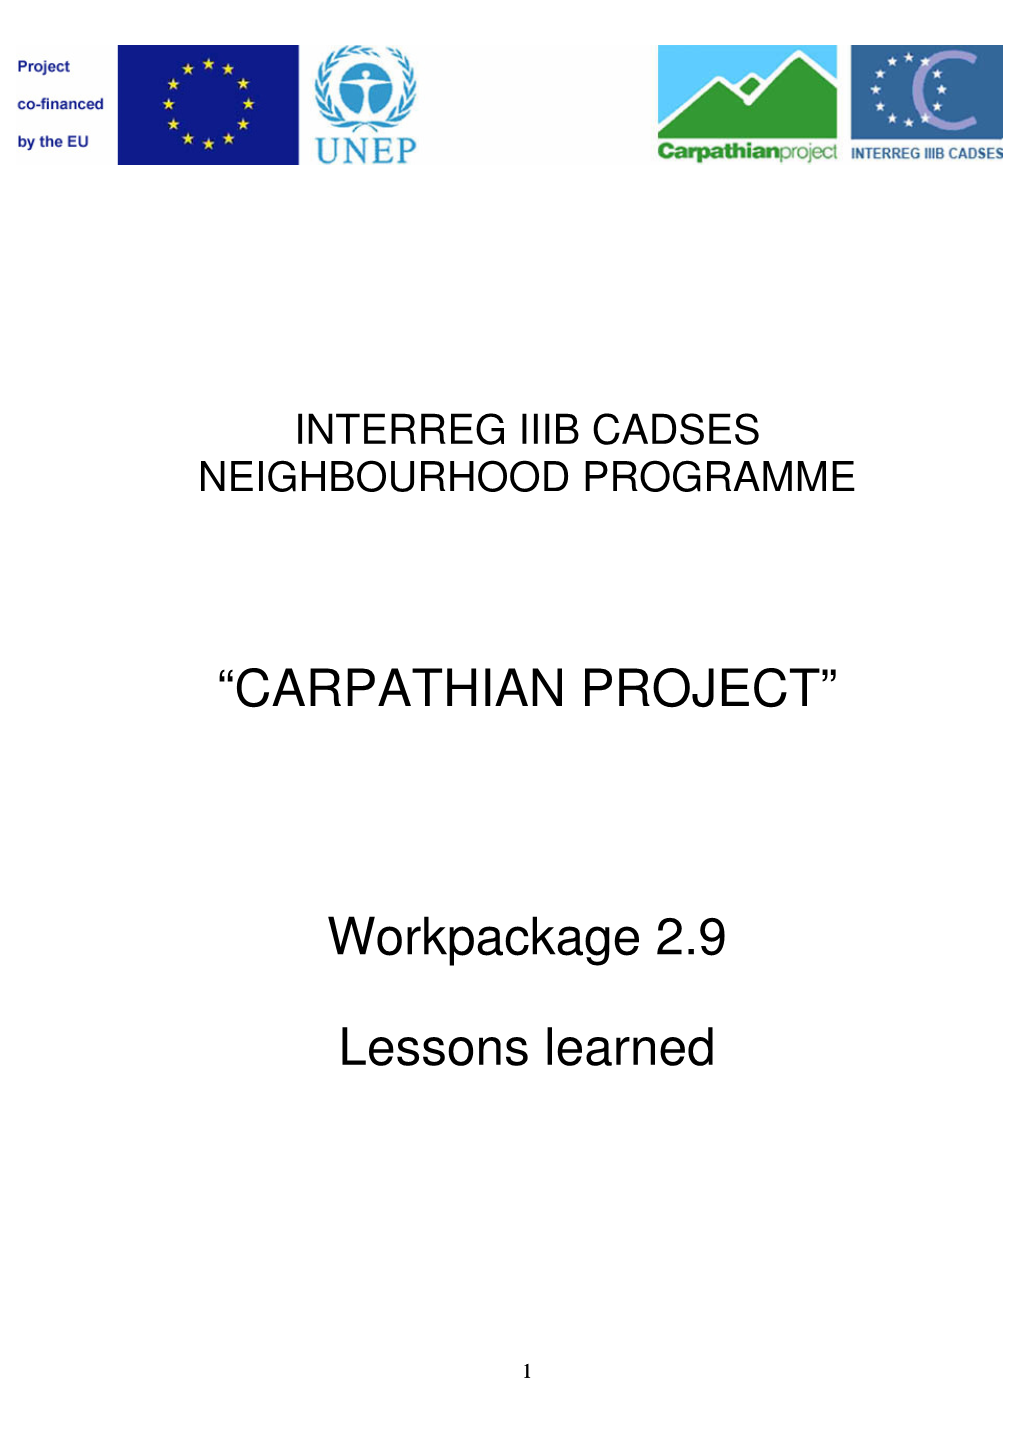 “CARPATHIAN PROJECT” Workpackage 2.9 Lessons Learned